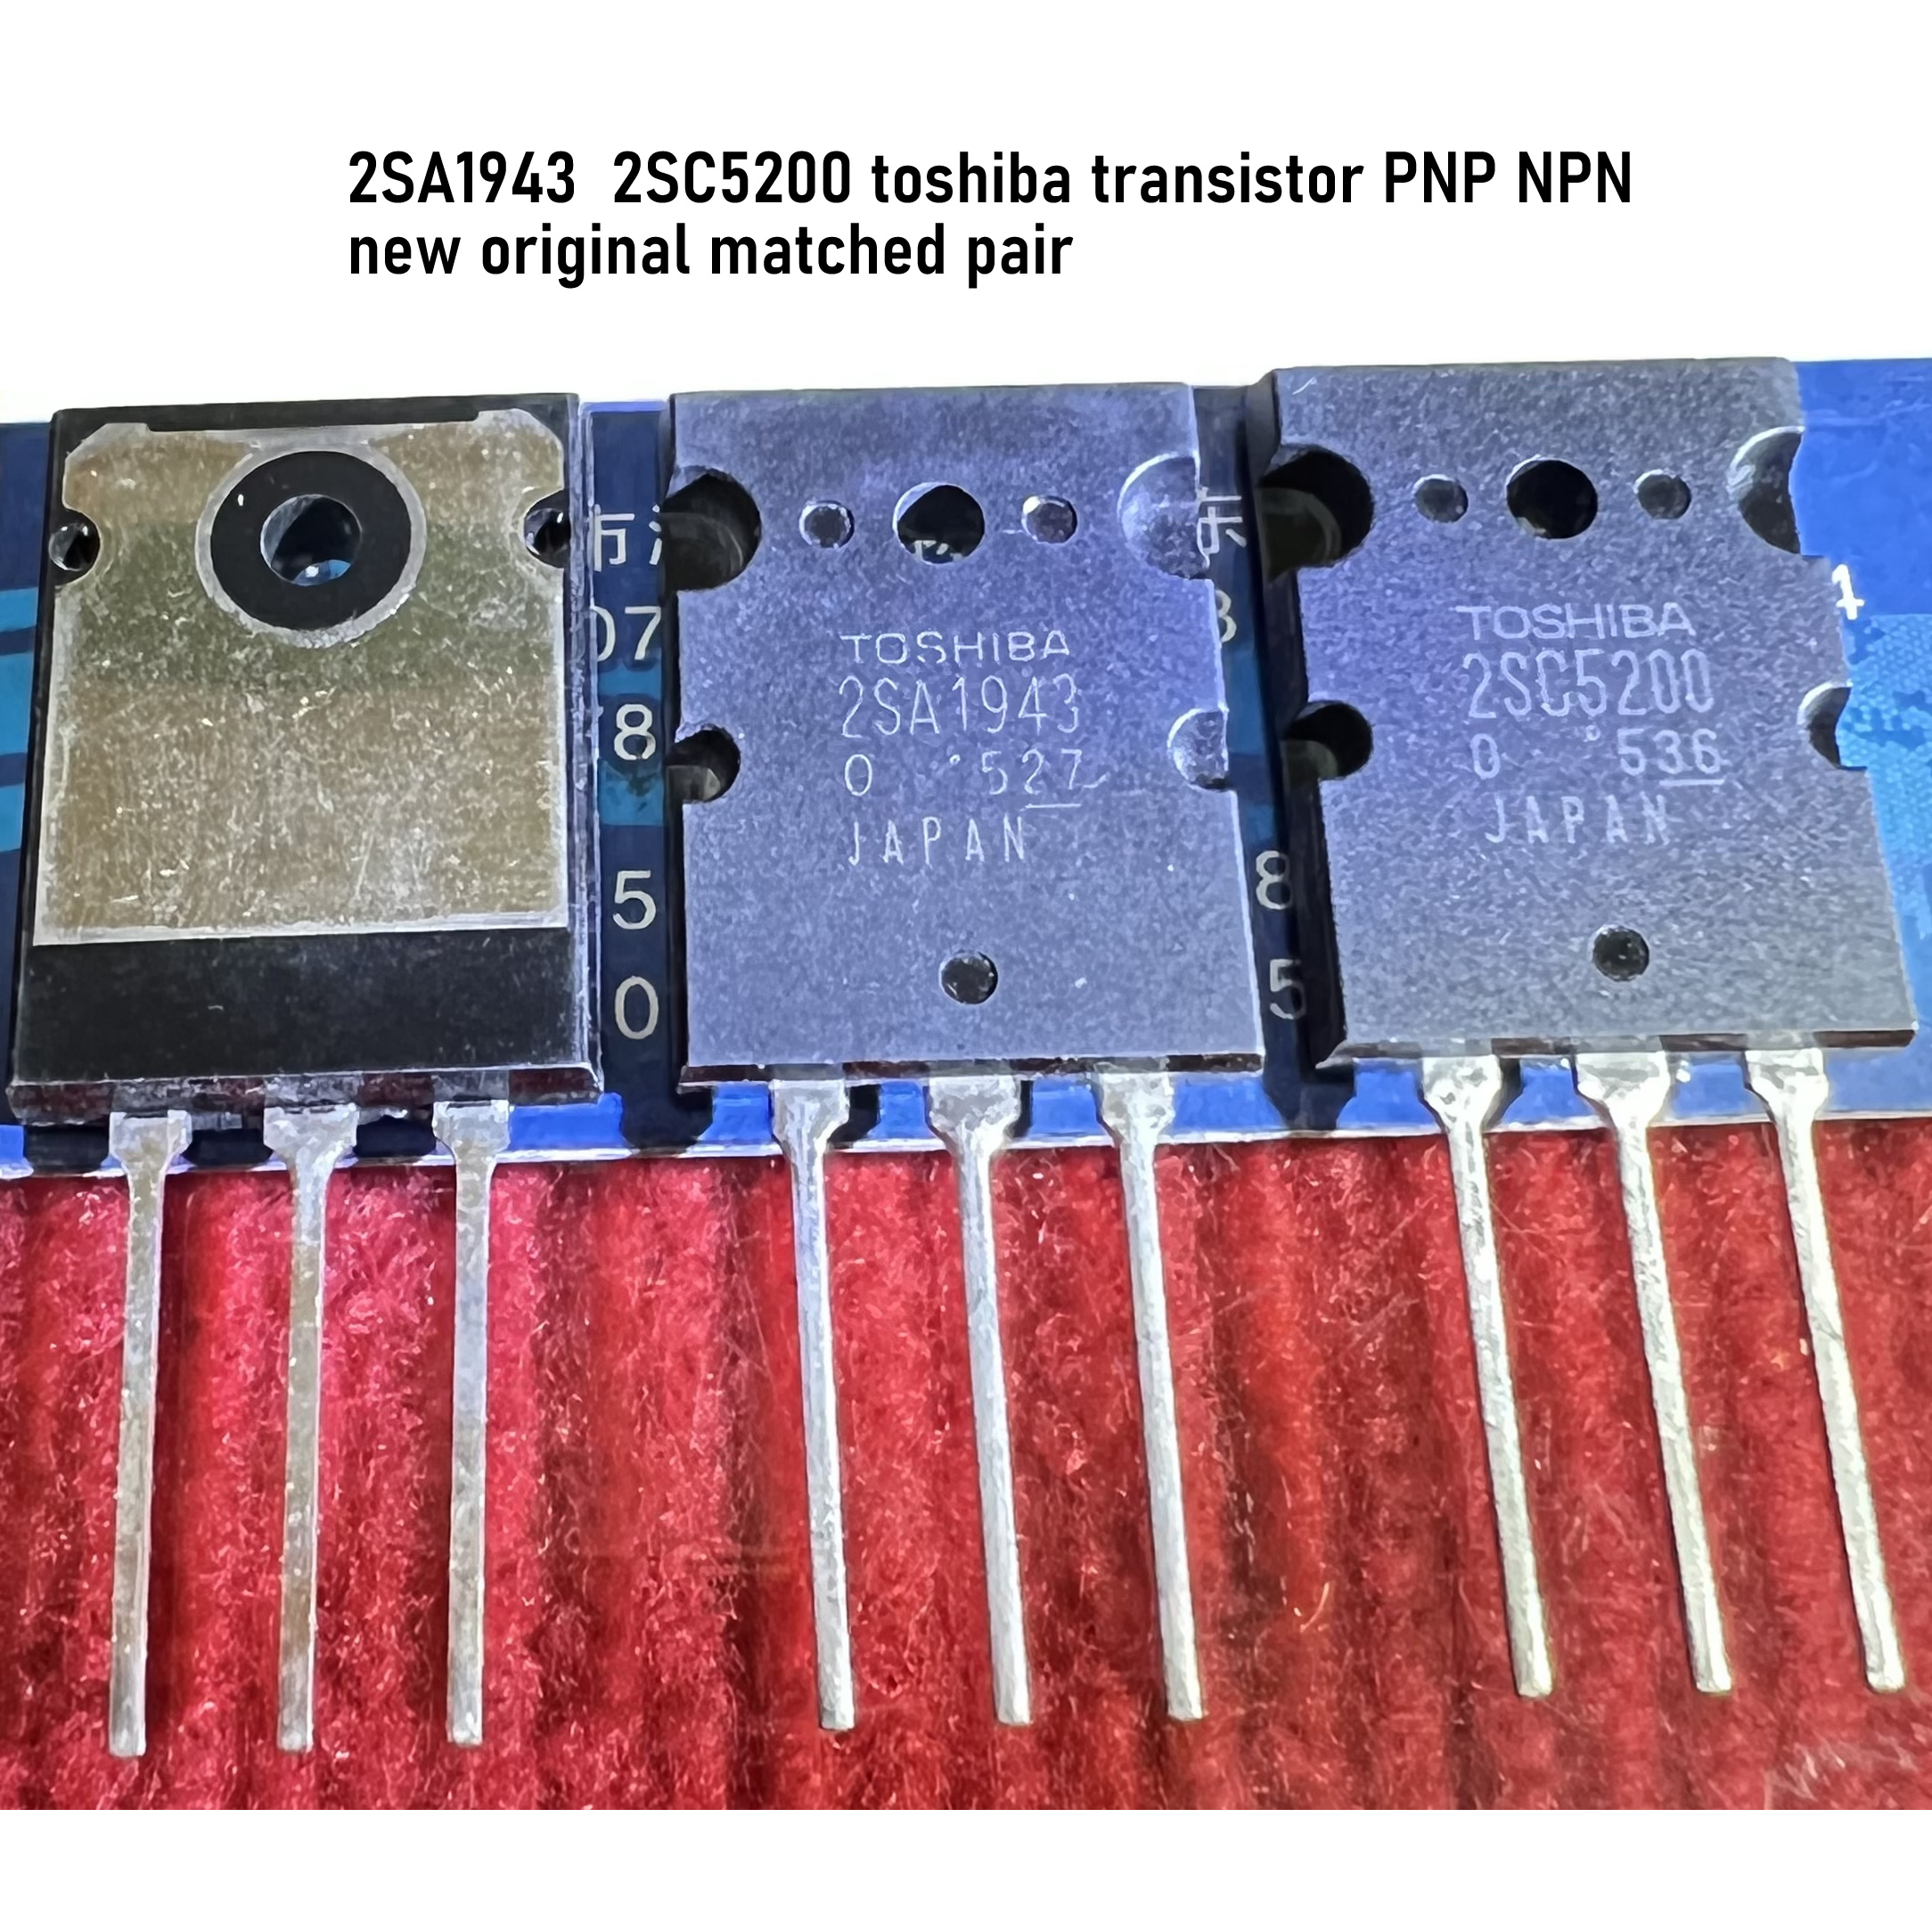 2SA1943 2SC5200 Toshiba transistor PNP NPN matched pair new original